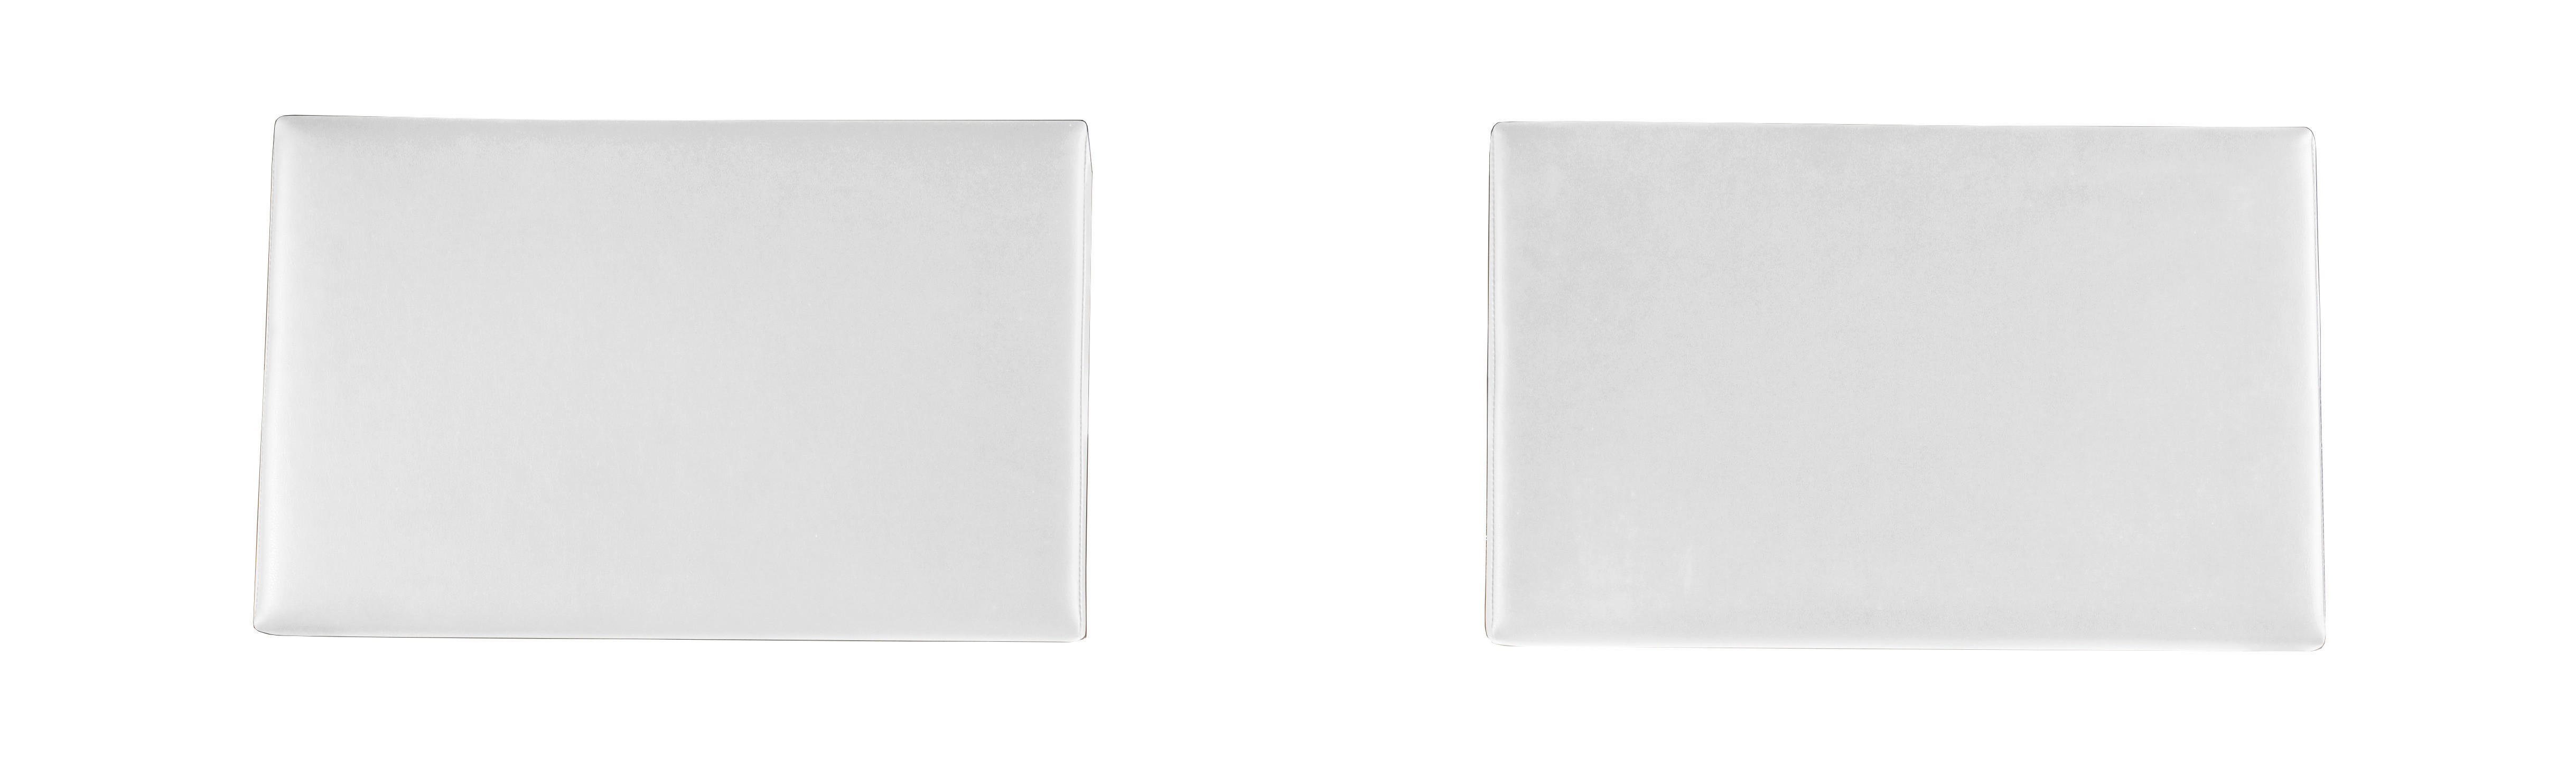 KOPFTEILPOLSTER 55/35/3,5 cm   - Weiß, Design, Textil (55/35/3,5cm) - Hasena